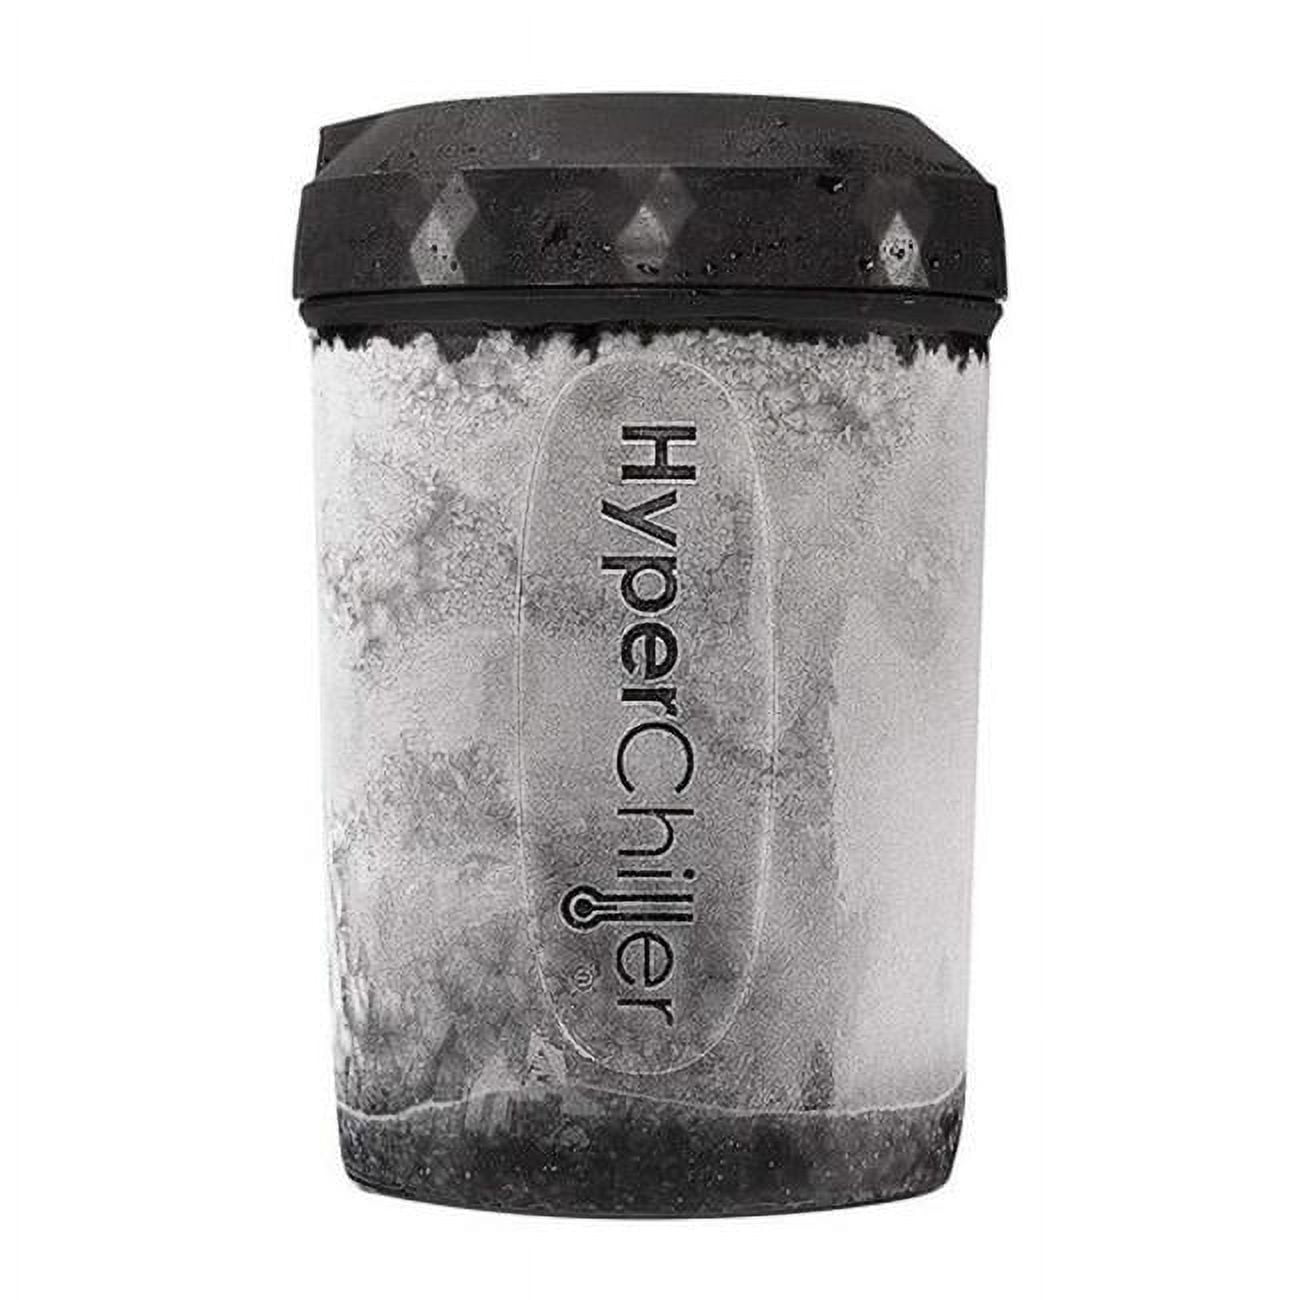 Hyper Chiller Iced Coffee Maker 12.5 Oz NEW Chill Wine Tea Whiskey